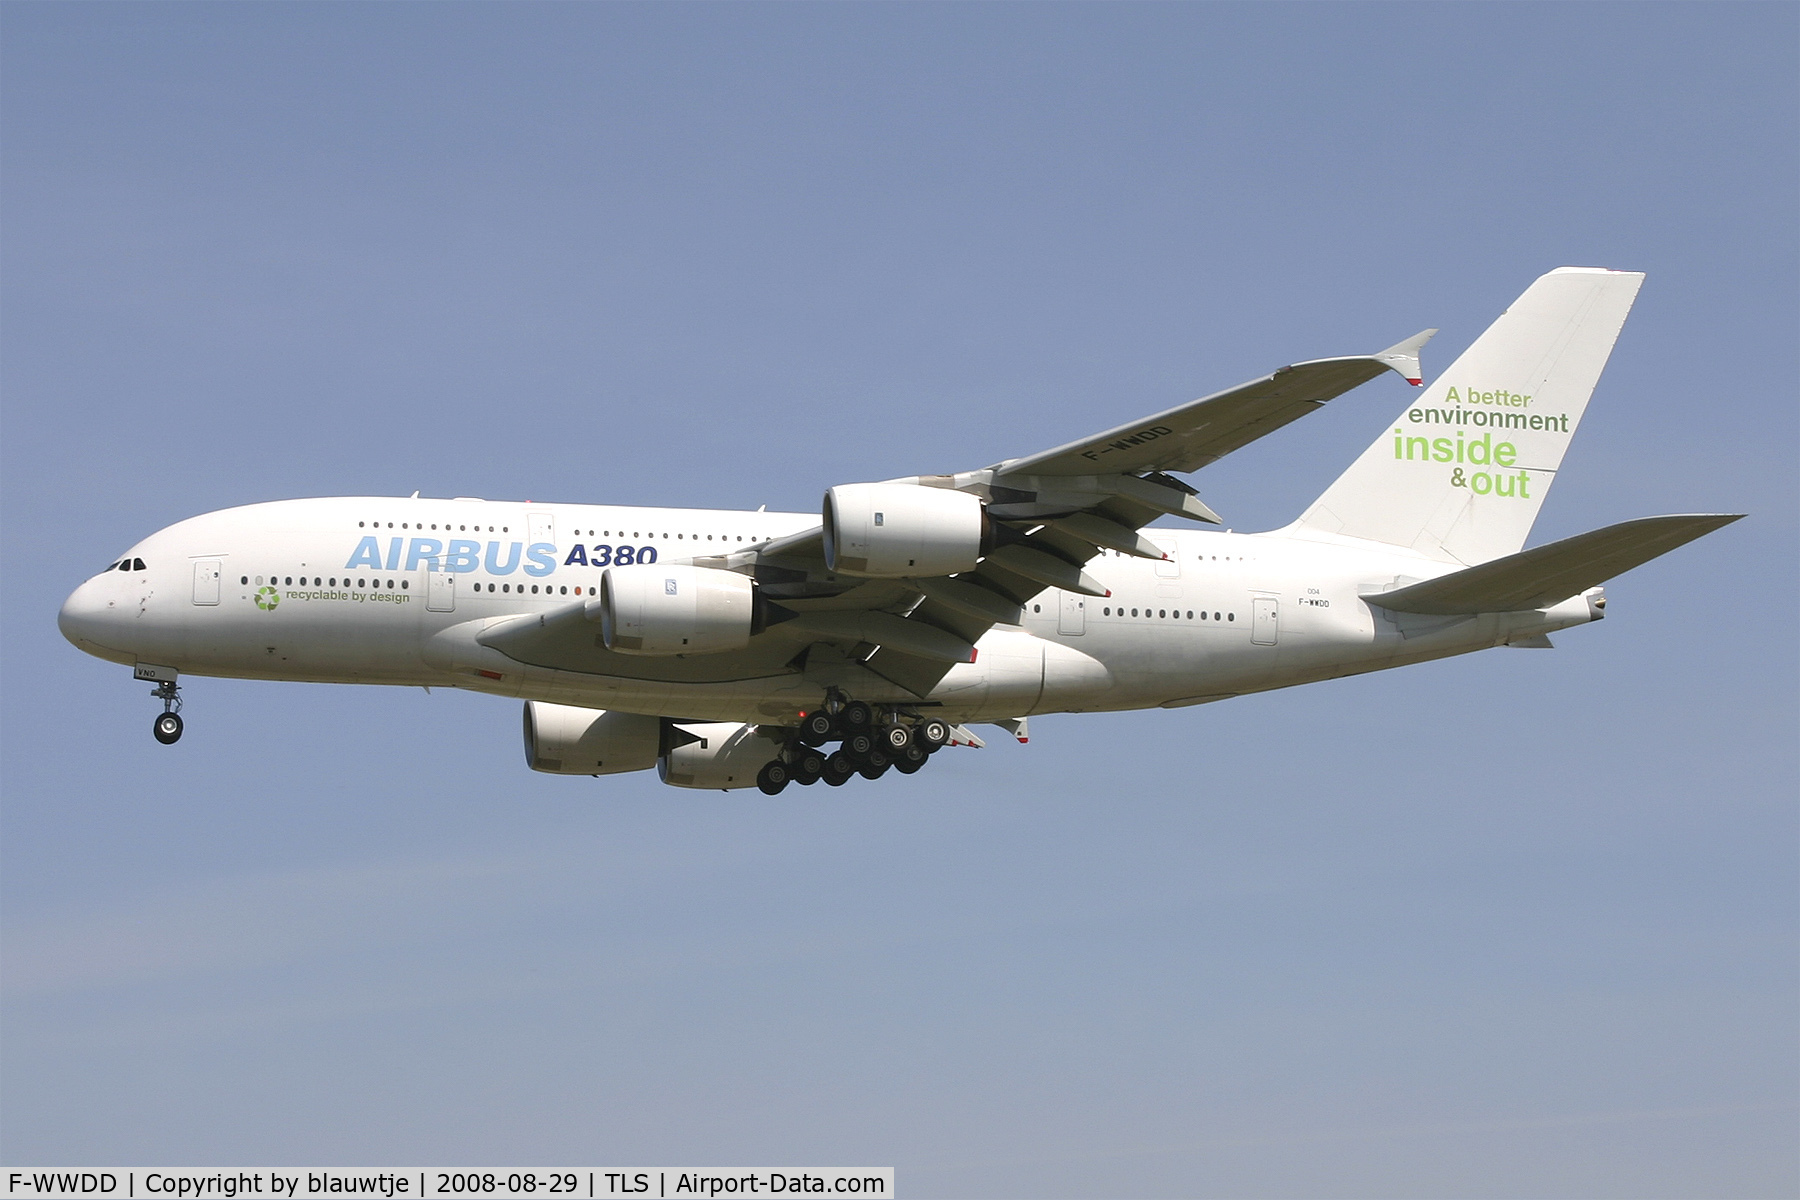 F-WWDD, 2005 Airbus A380-861 C/N 004, Approach on TLS after training flight from CHR